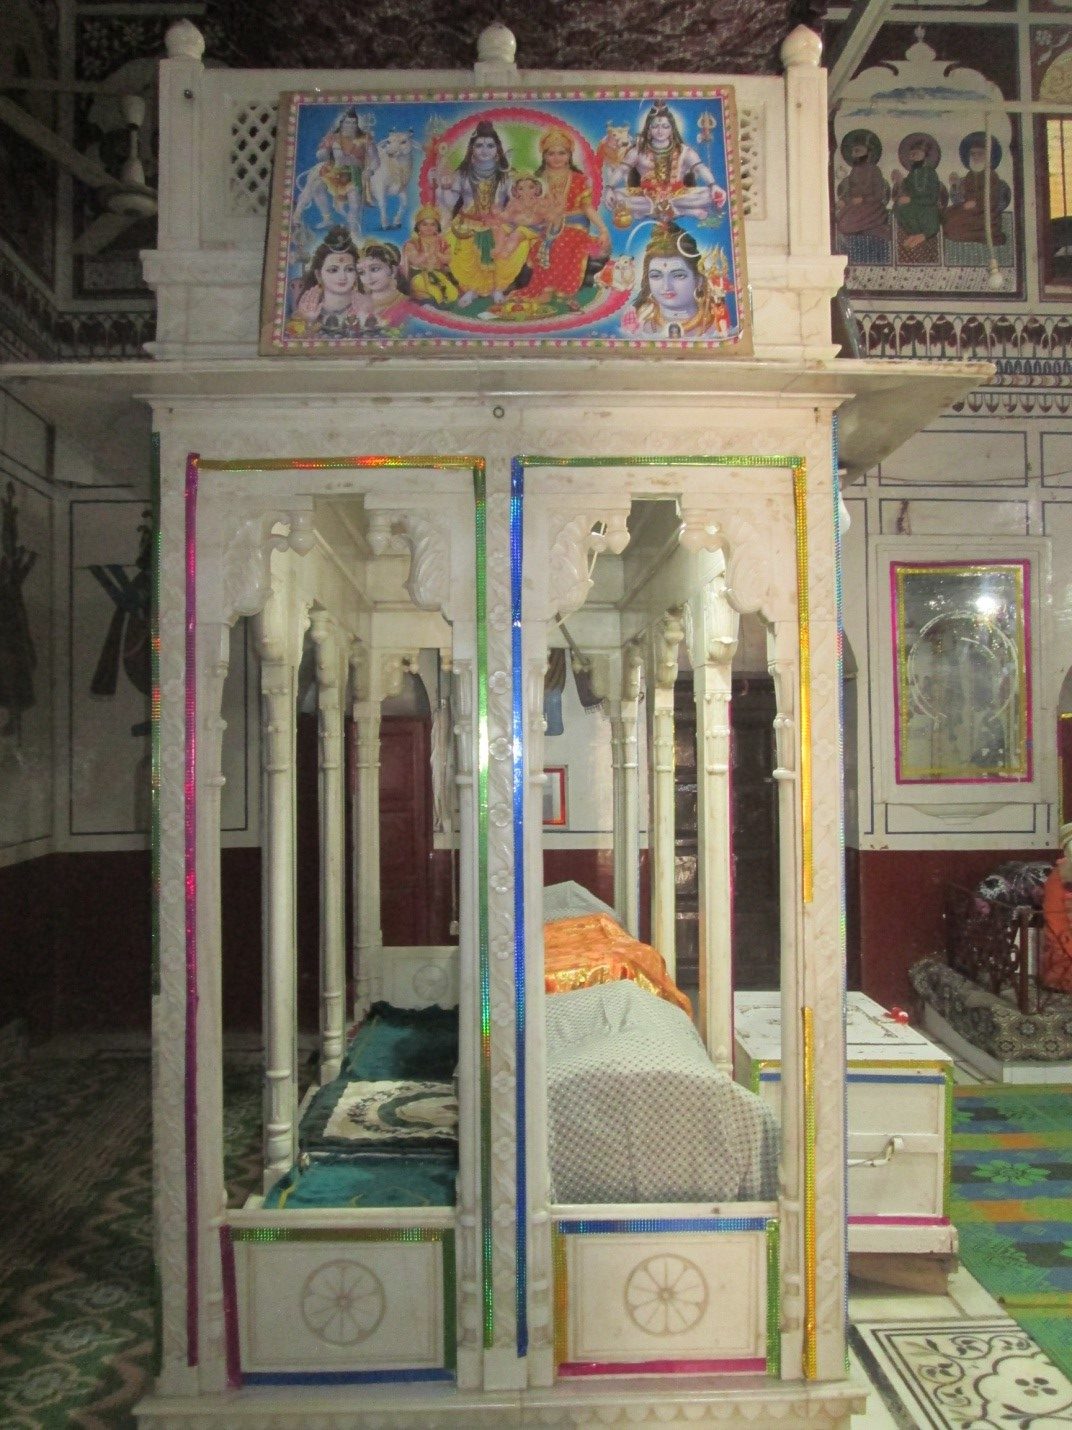 Guru Granth Sahib, Bhagwat Geeta, Vedas and Puranas are kept in Marble structure - Sindh Courier